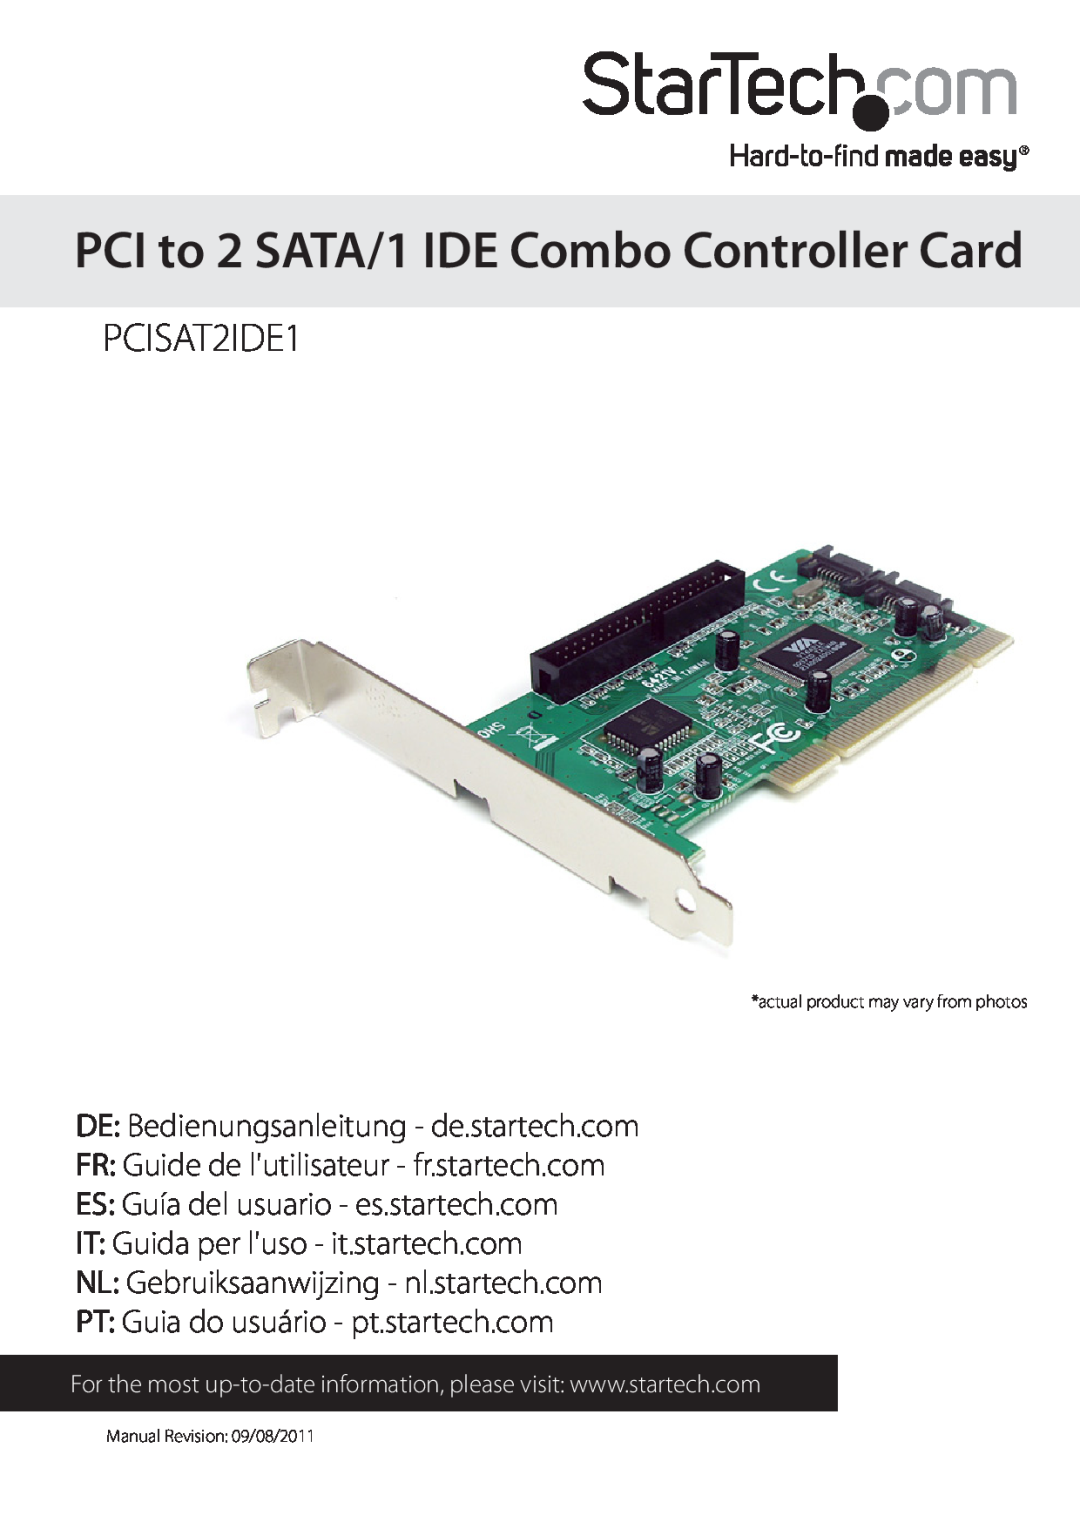 StarTech.com PCISAT2IDE1 manual PCI to 2 SATA/1 IDE Combo Controller Card, DE Bedienungsanleitung - de.startech.com 